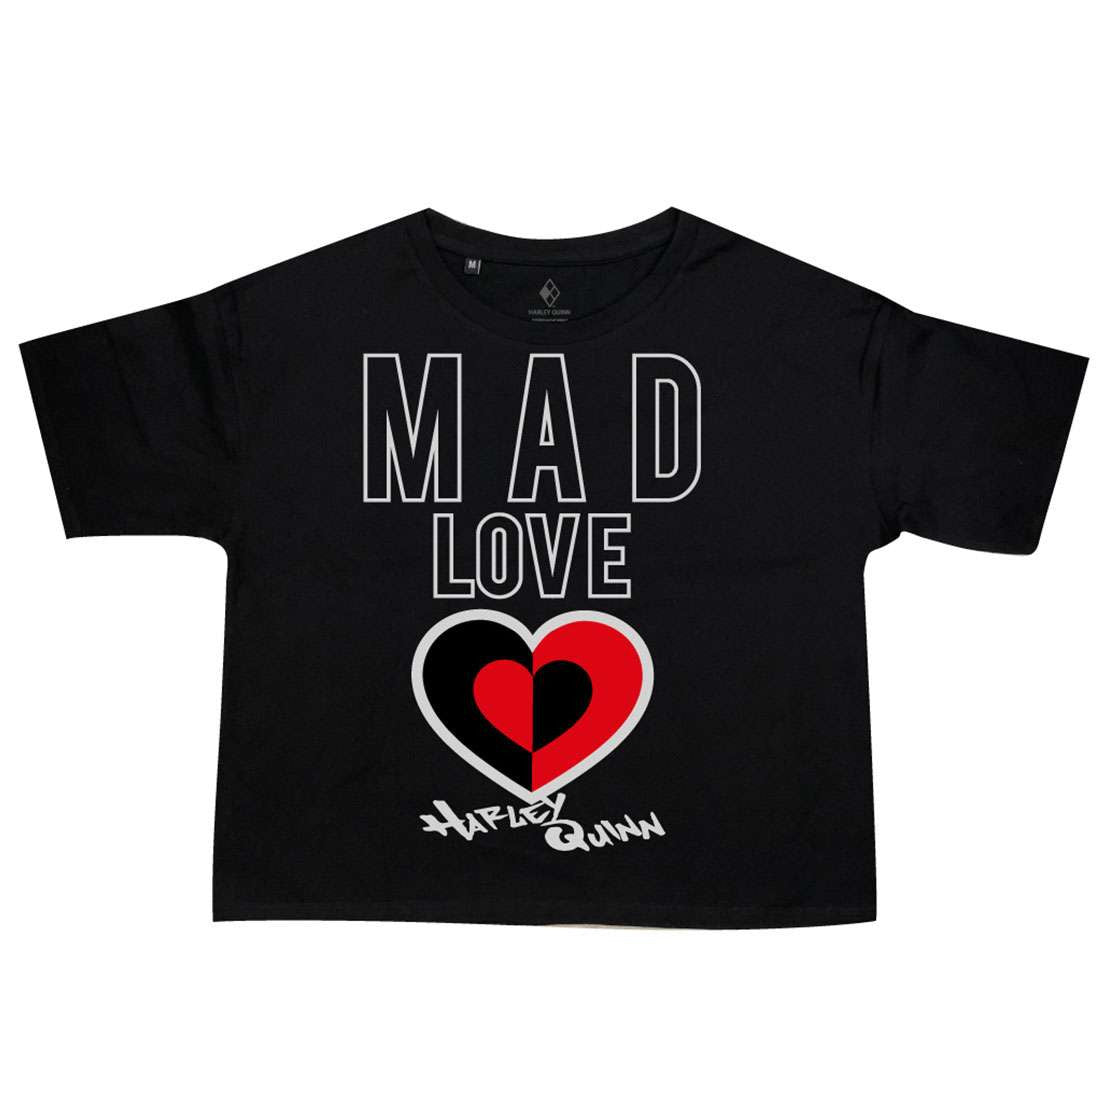 Harley Quinn DC Comics Women's T-shirt - Mad Love